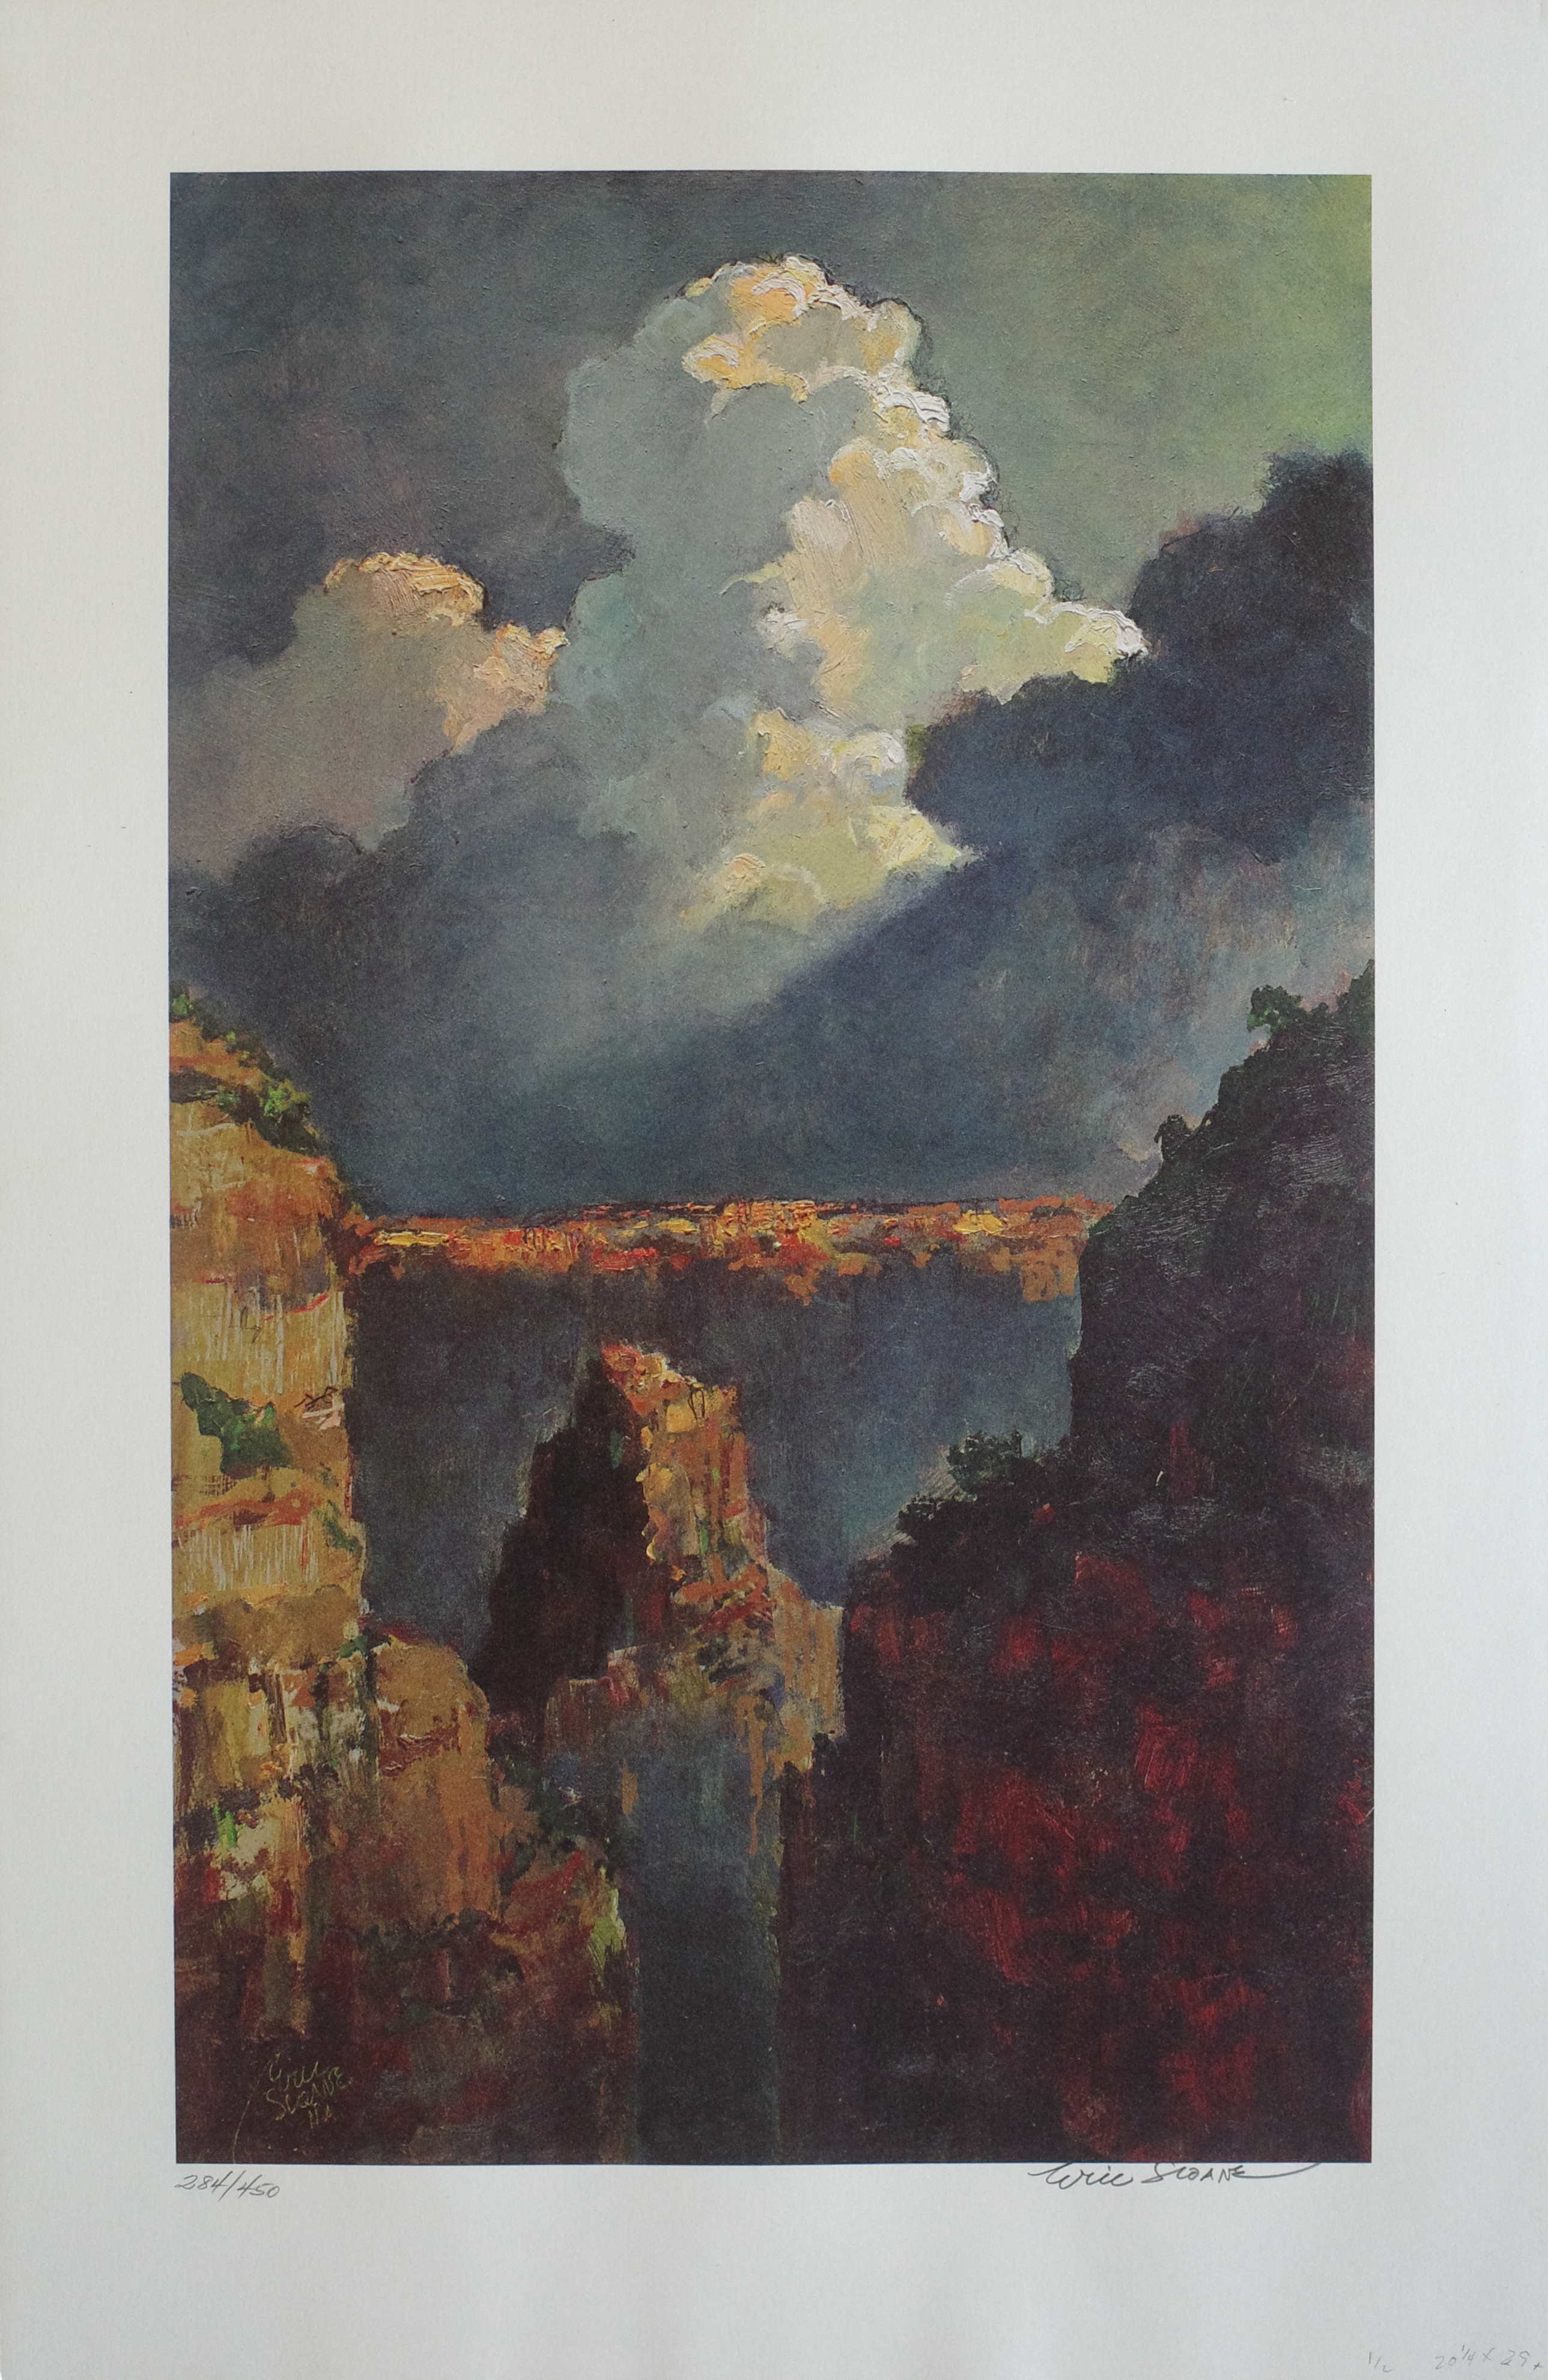 Eric Sloane Painting Title: Deep Canyon